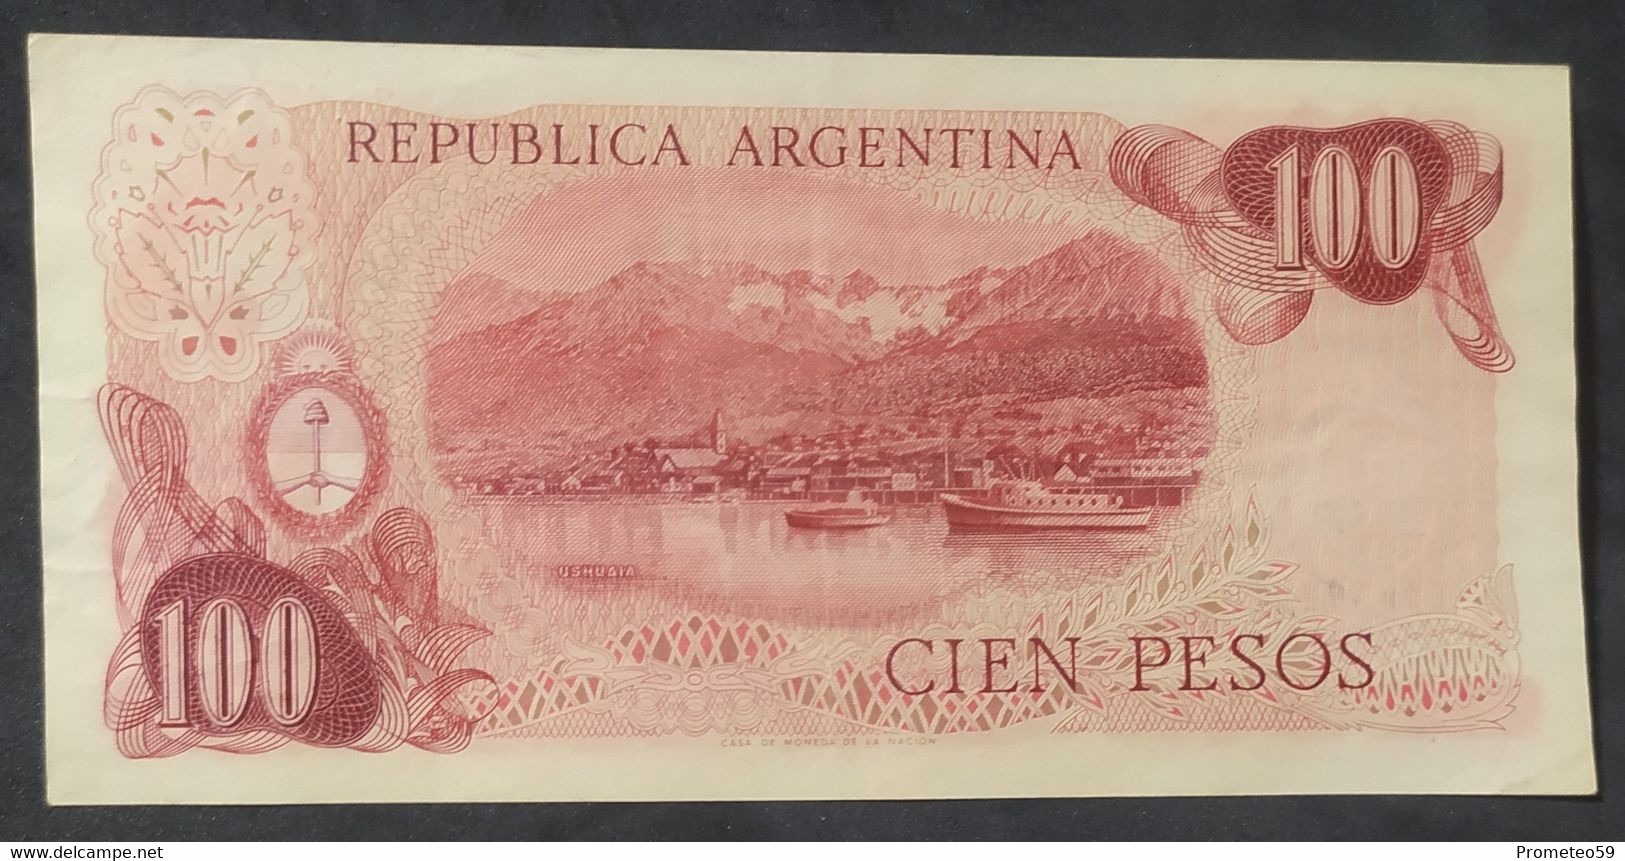 Argentina – Billete Banknote De $100 Ley 18.188 – Serie C – Año 1977 - Argentine